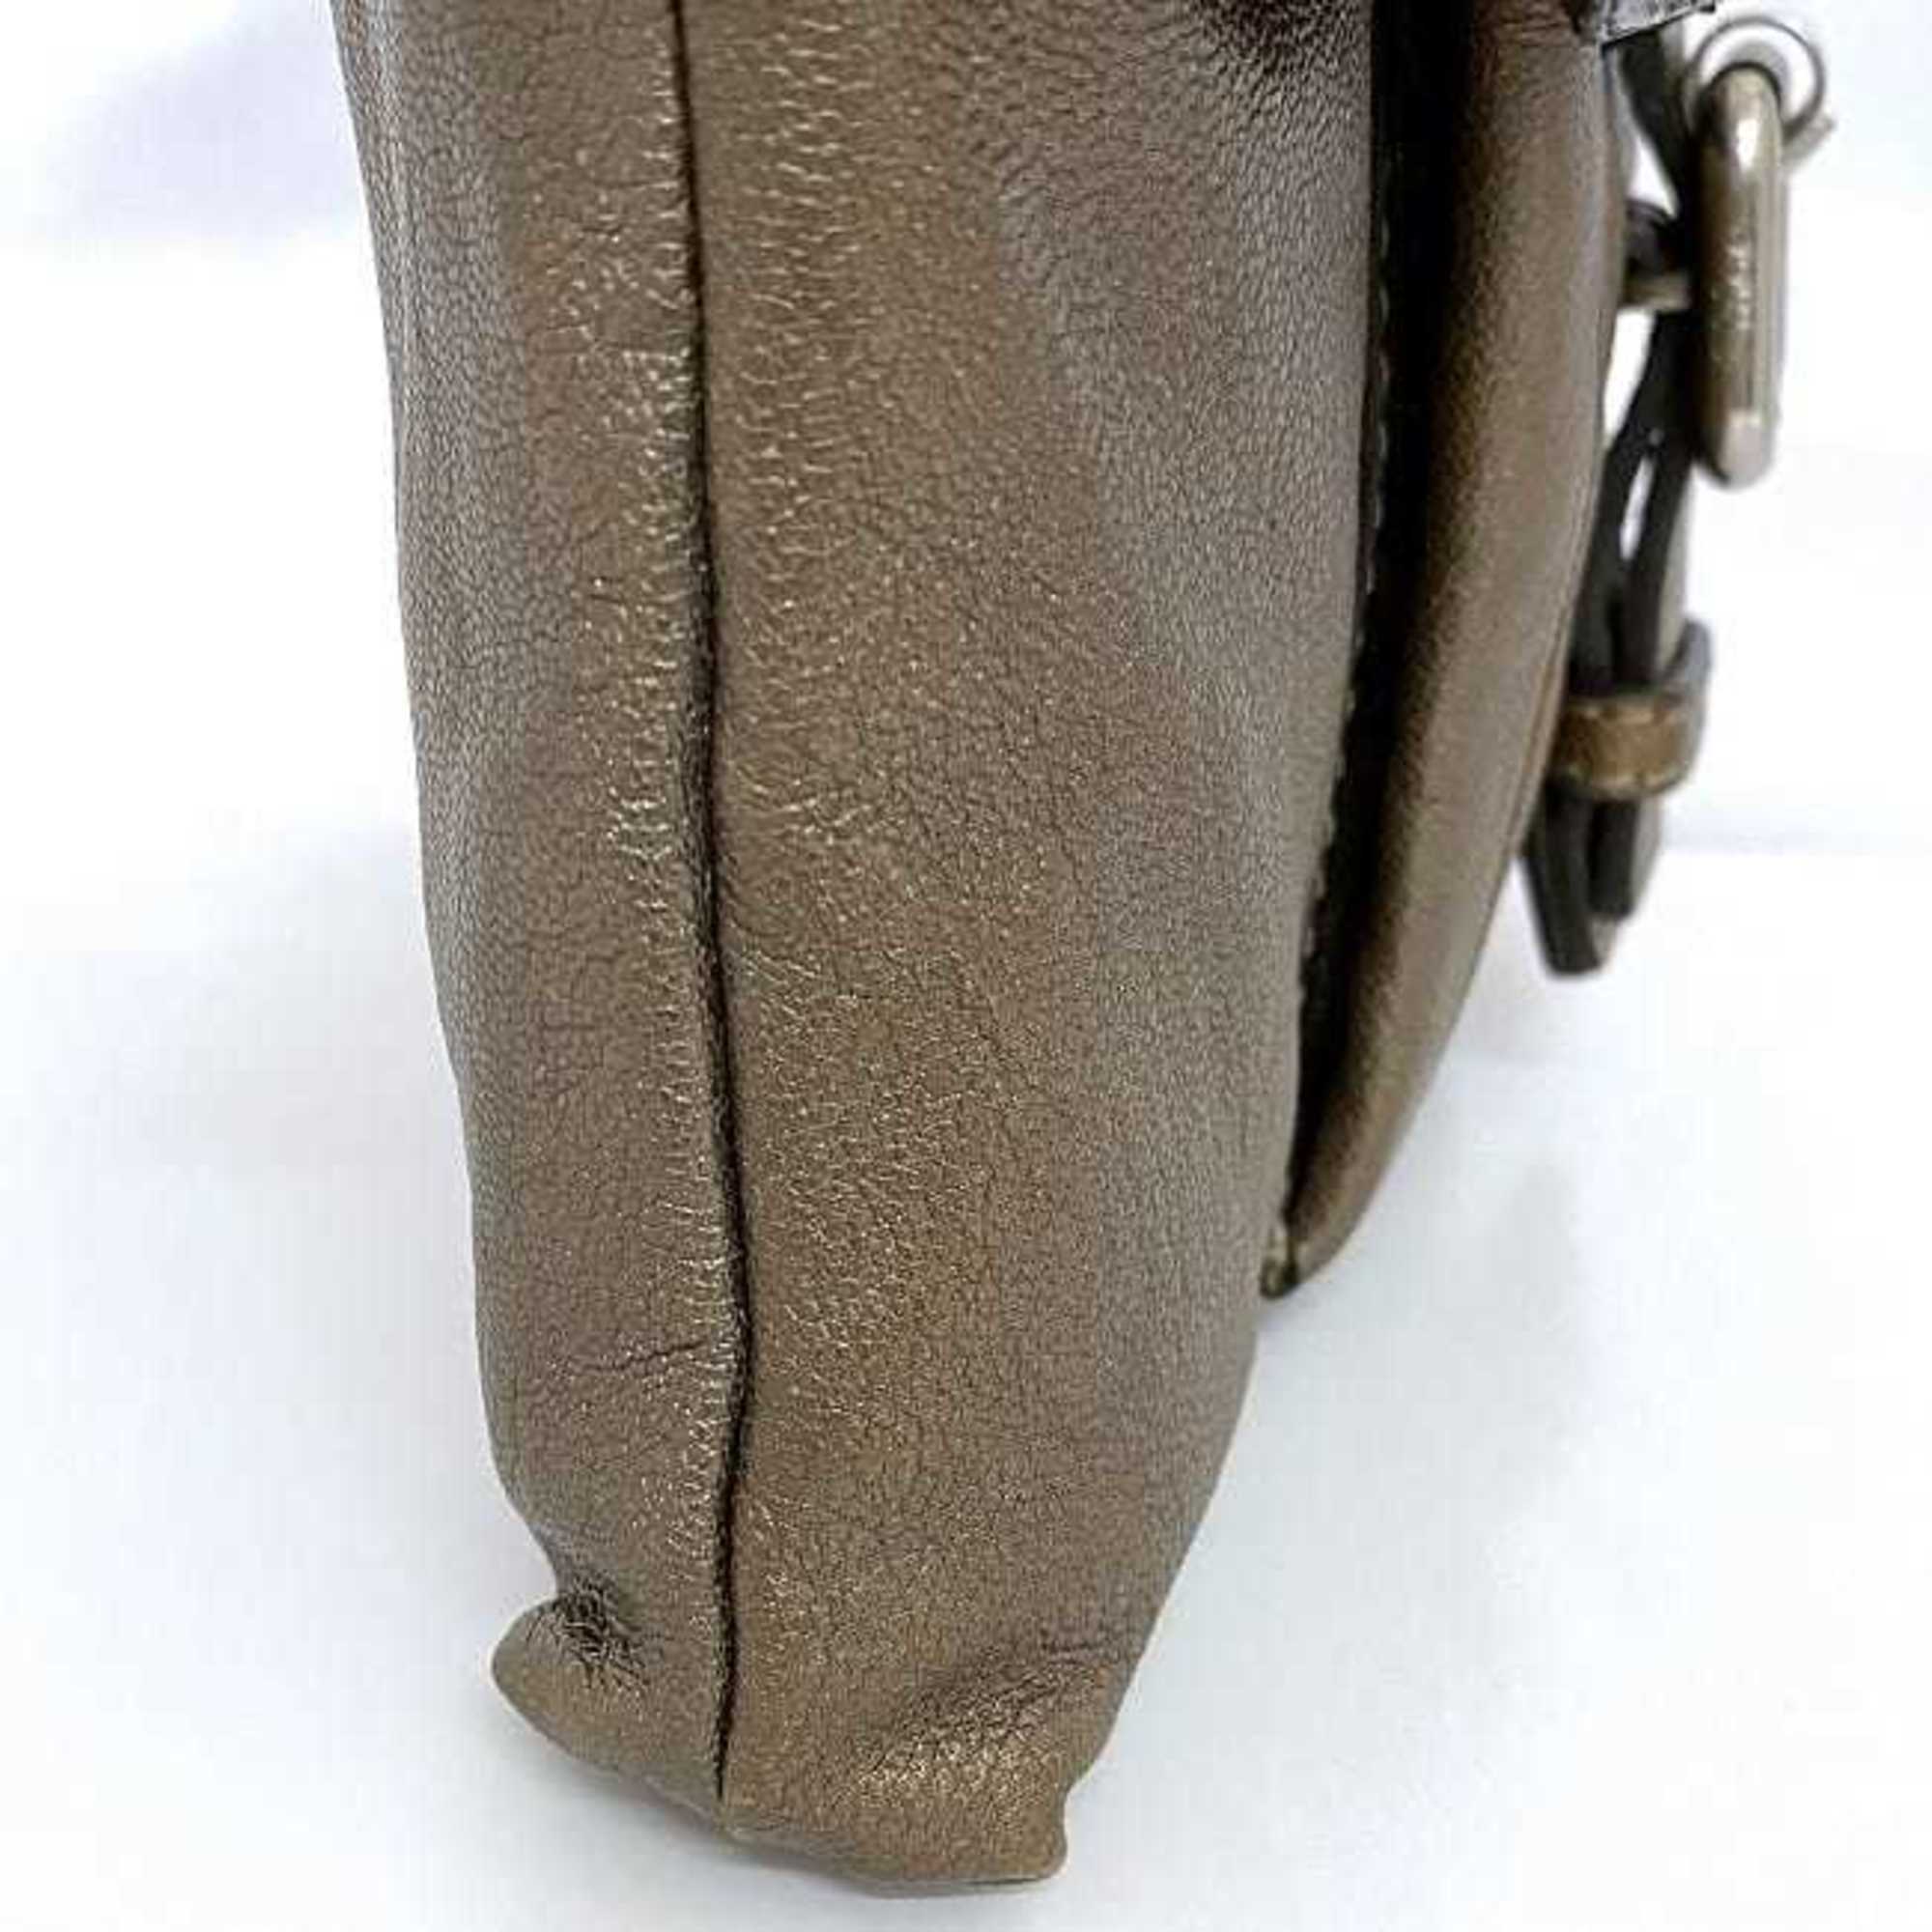 Chloé Chloe bag metallic brown ec-20455 pouch leather flap ladies